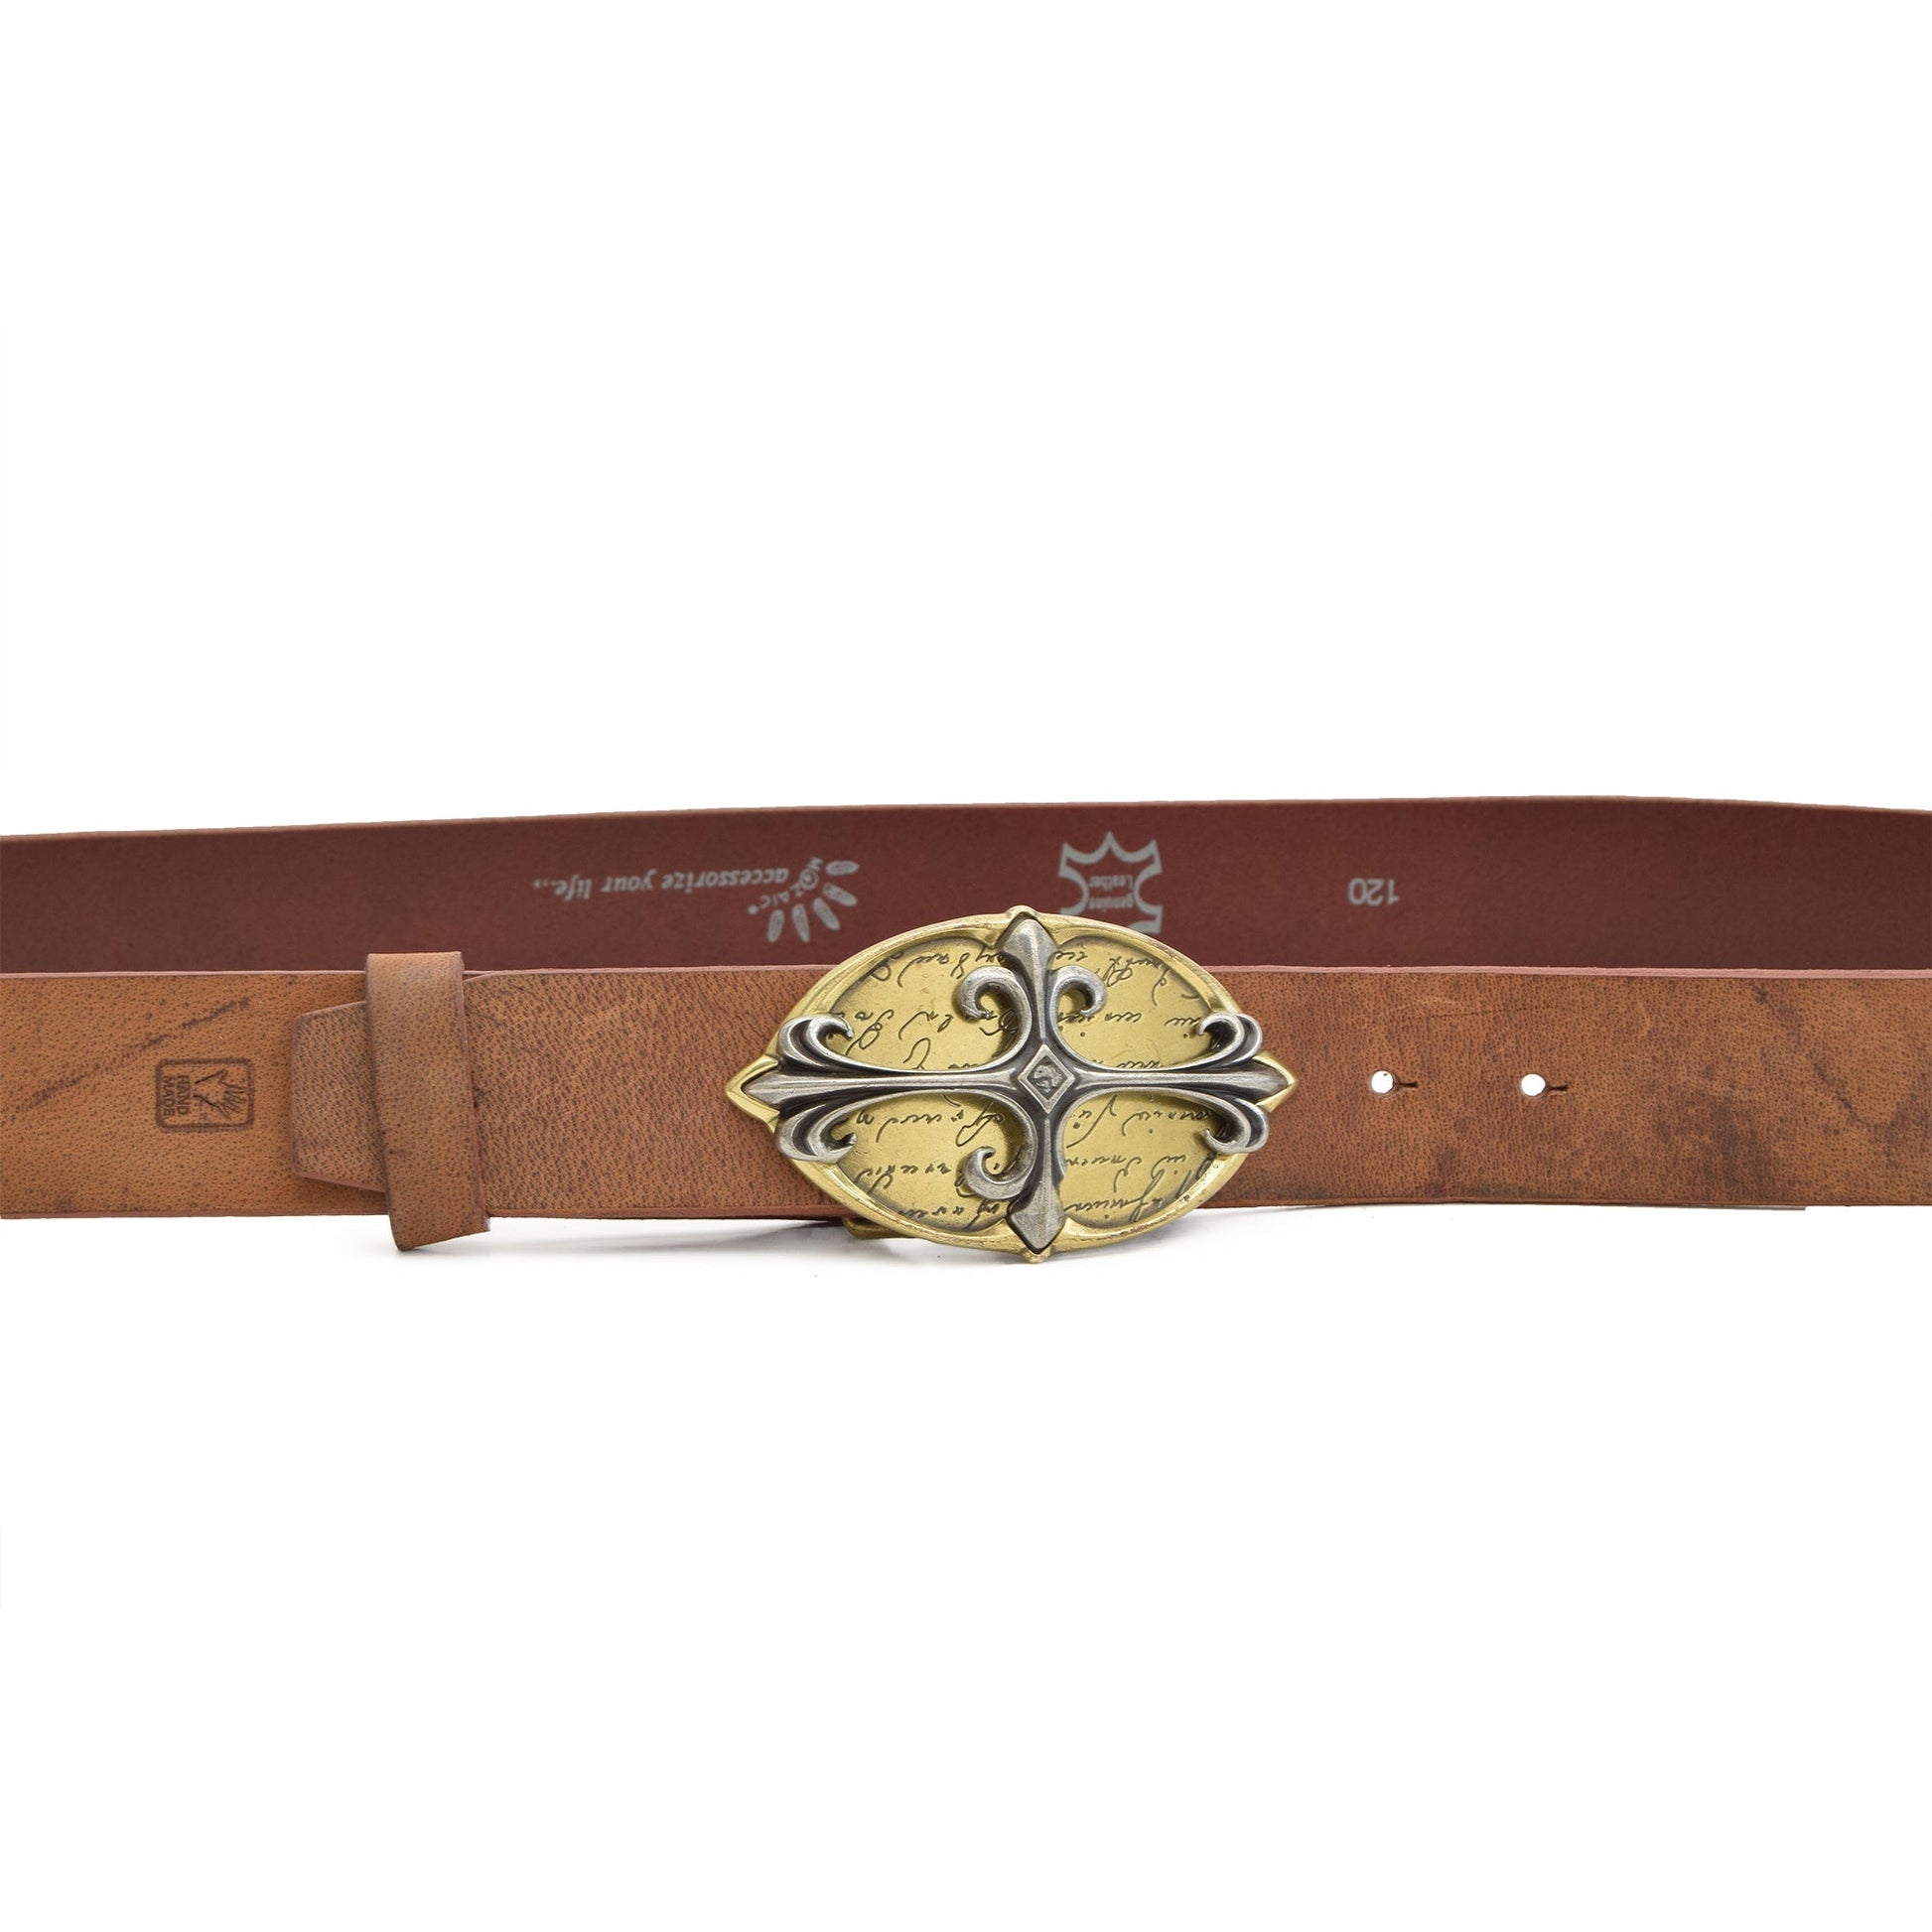 Pulse Leather Belt Tan with Changeable Buckle - Belts Zengoda Shop online from Artisan Brands